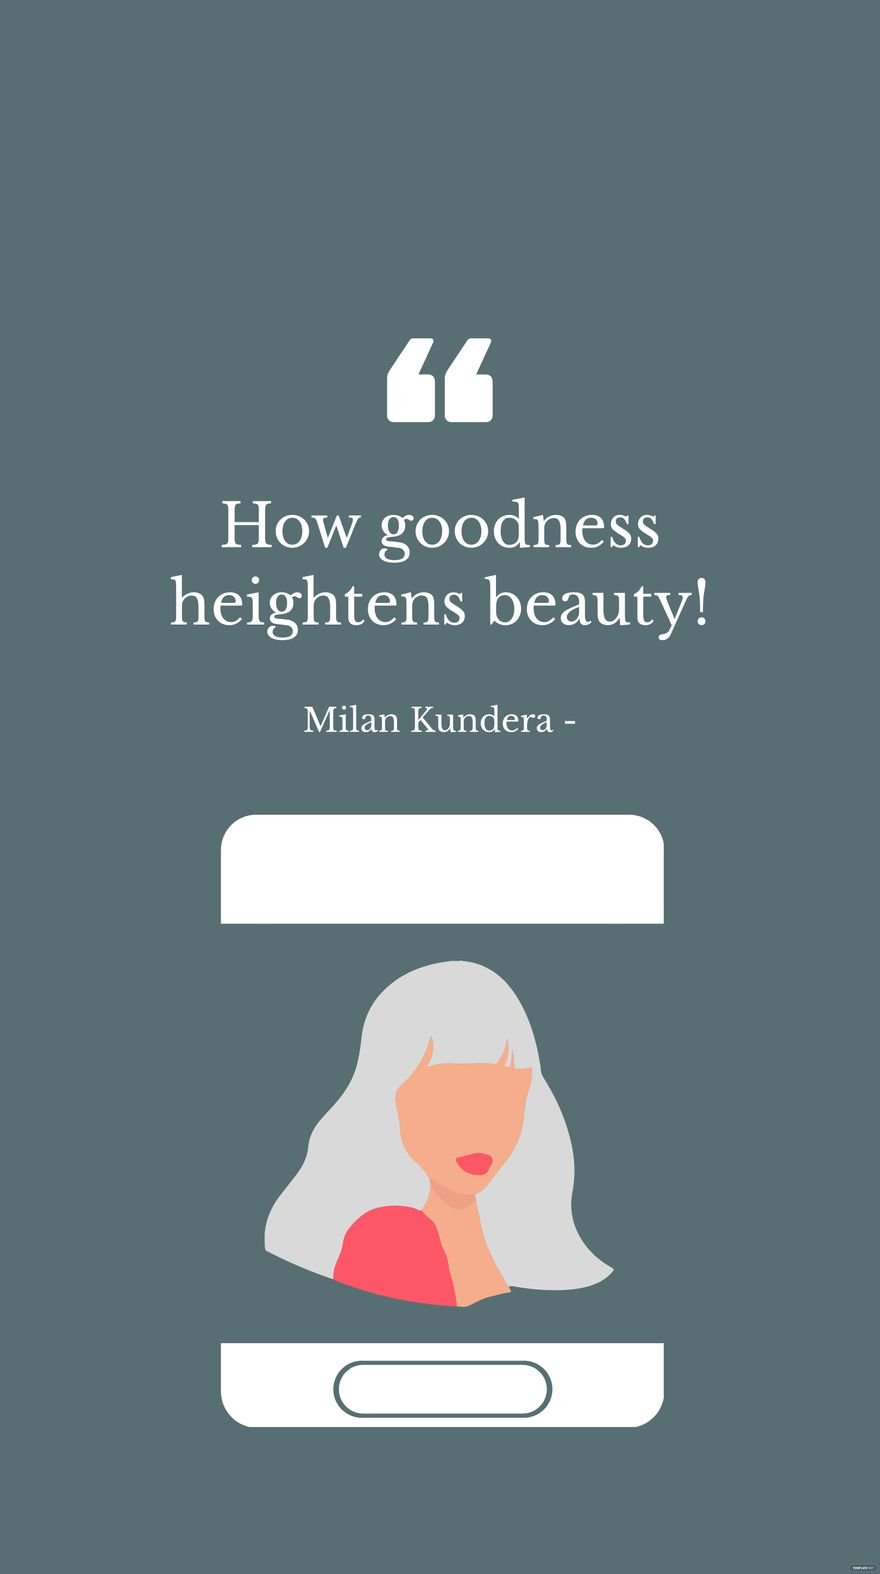 Free Milan Kundera - How goodness heightens beauty! in JPG